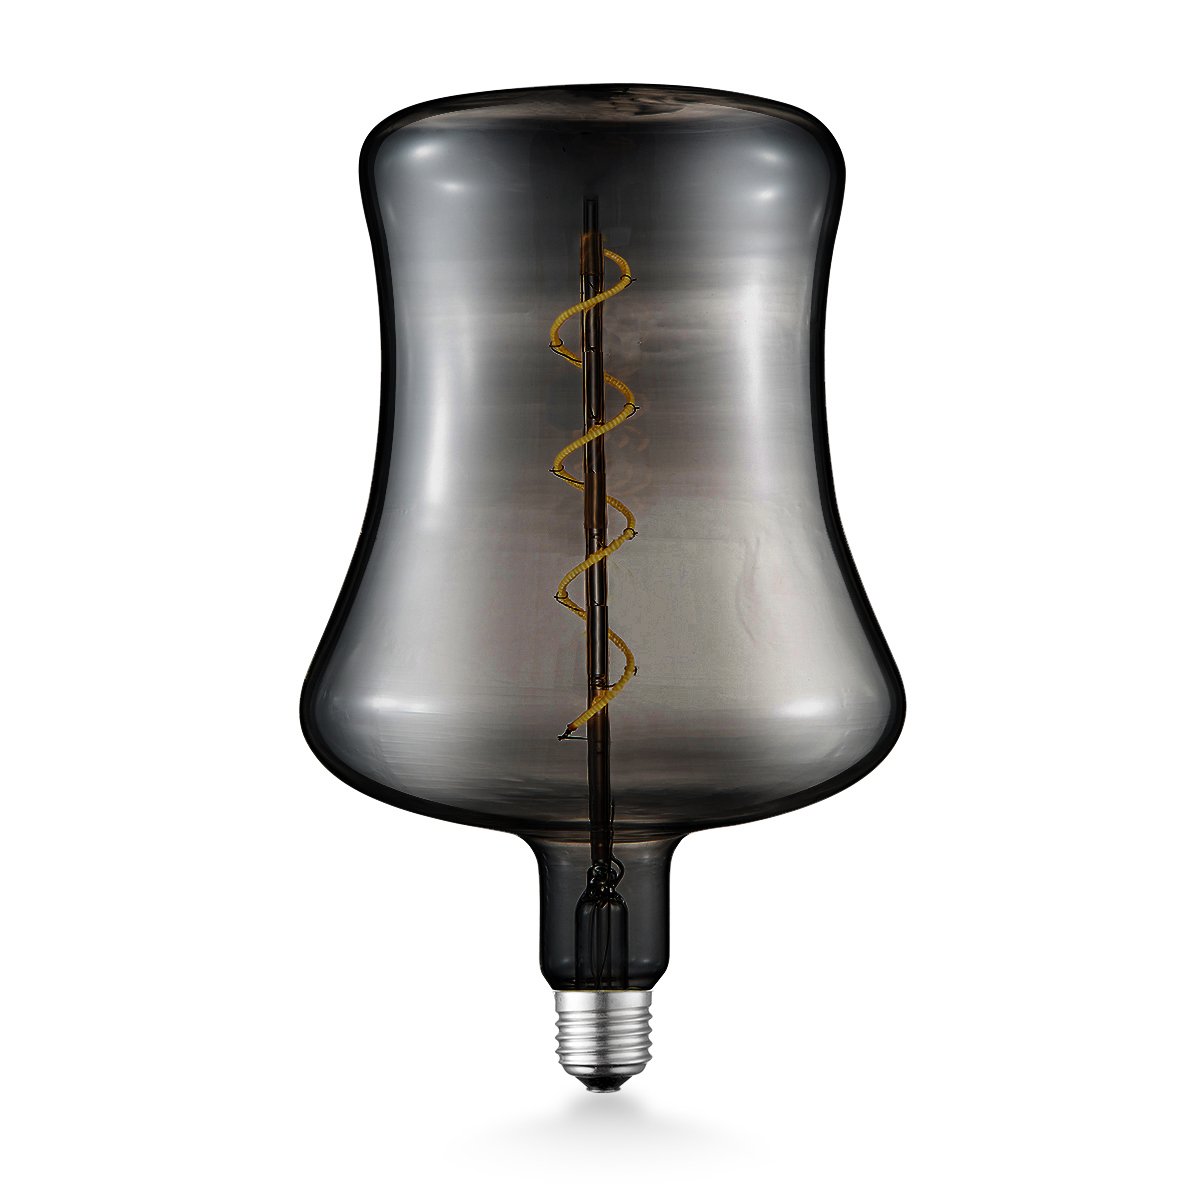 Tangla lighting - TLB-8063-04TM - LED Light Bulb Single Spiral filament - special 4W titanium - reel - dimmable - E27